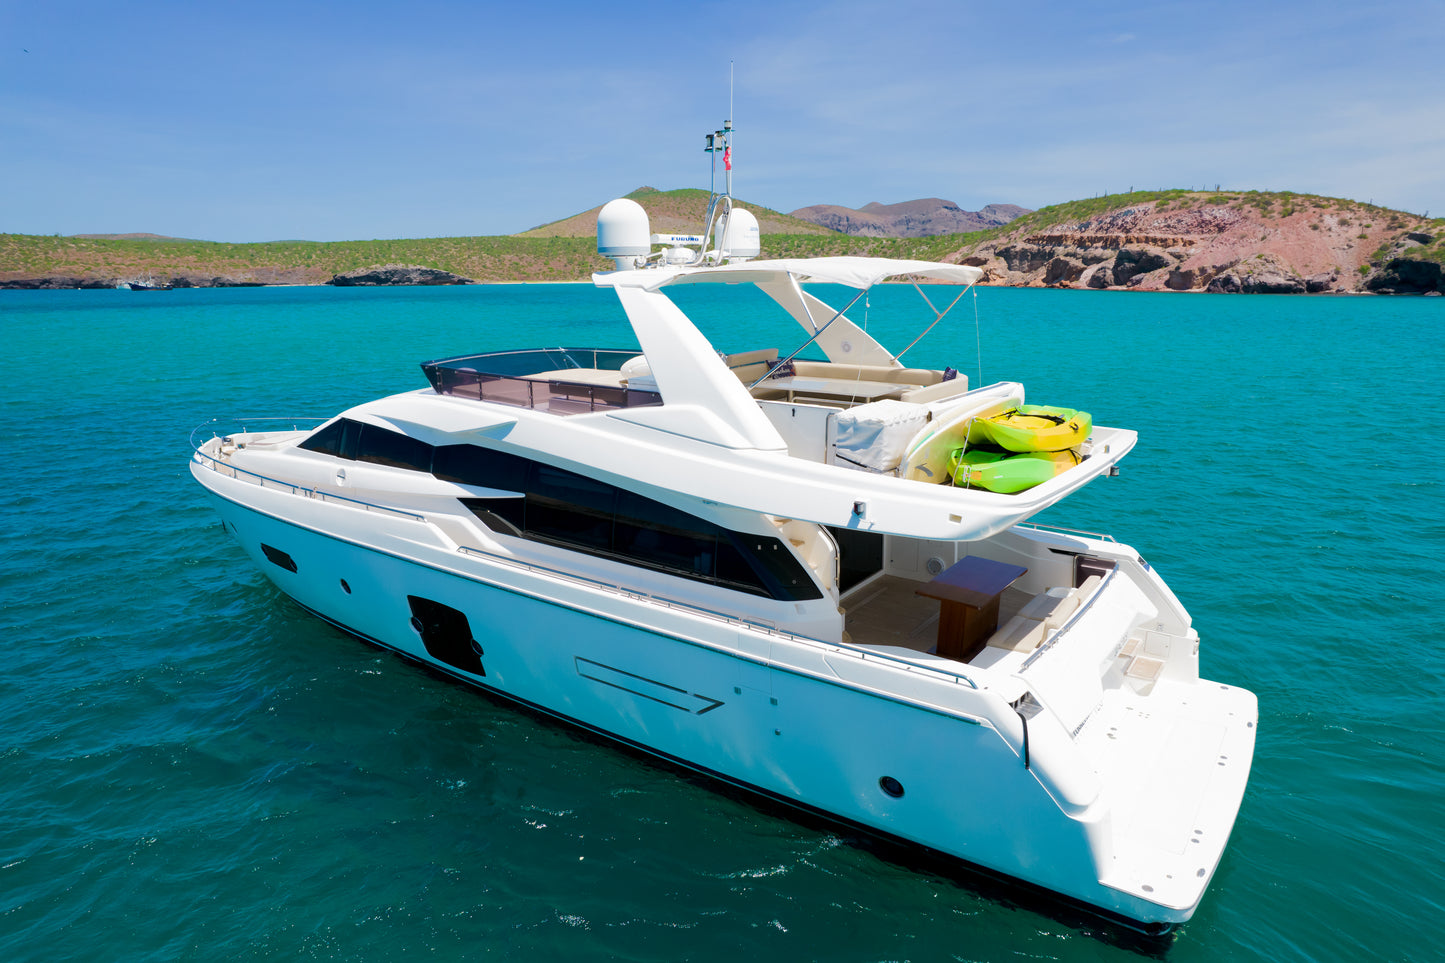 2013 Ferretti 720 Located in Baja, Mexico. LLC Owned Vessel!